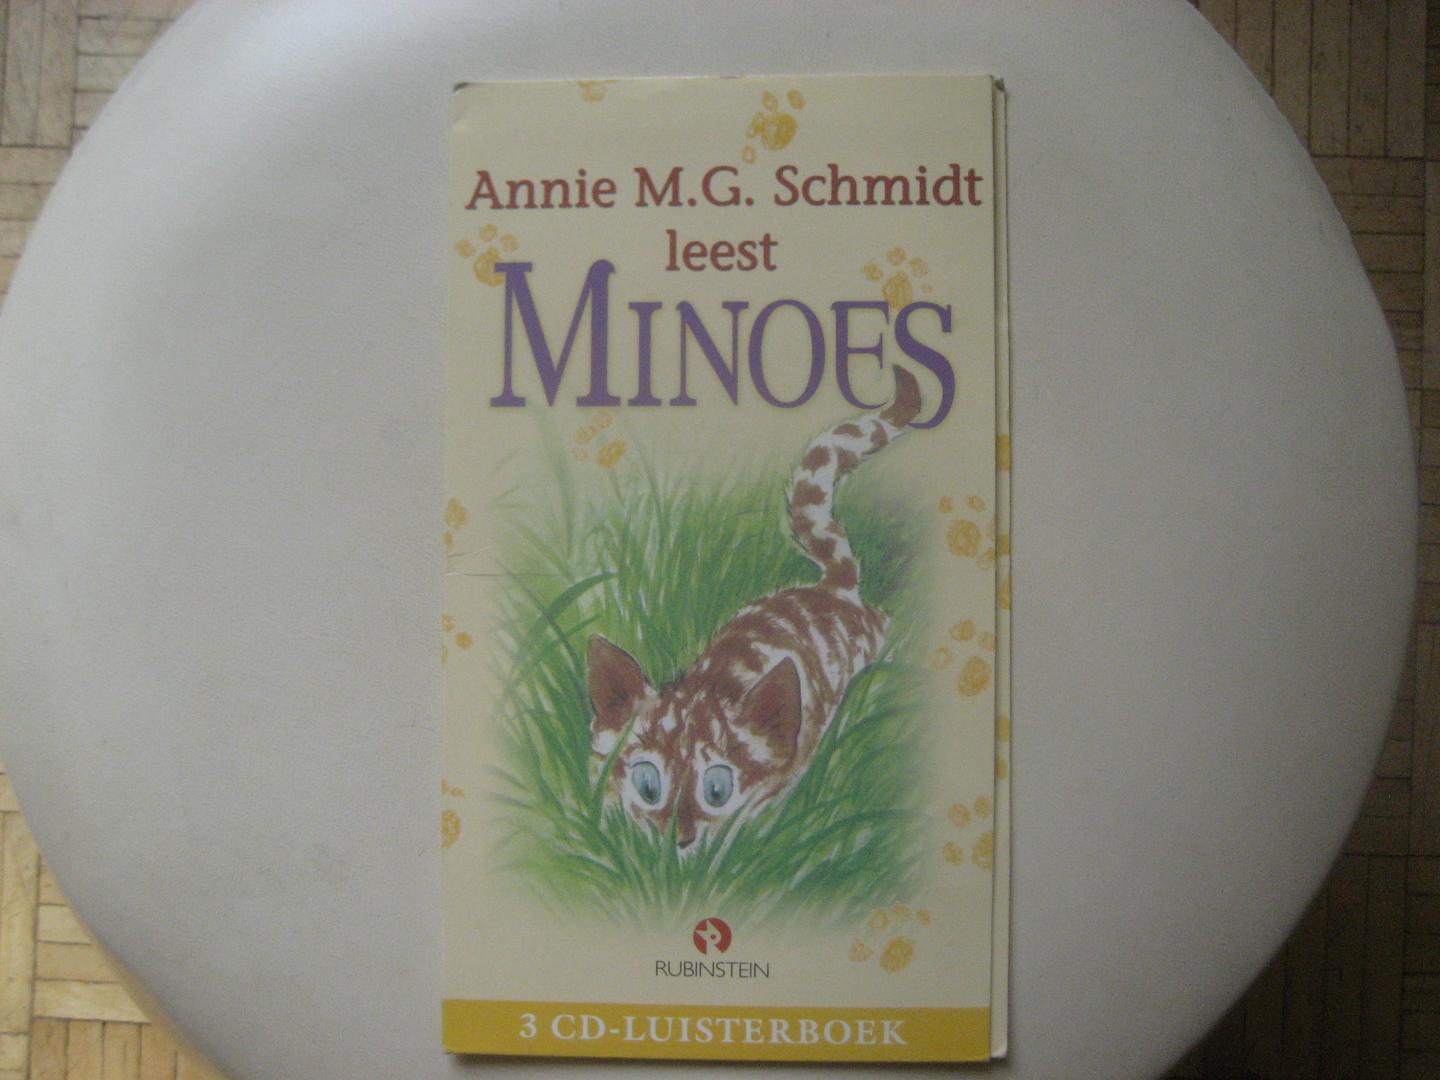 Annie M.G.Schmidt - MINOES / Annie M.G. Schmidt leest Minoes